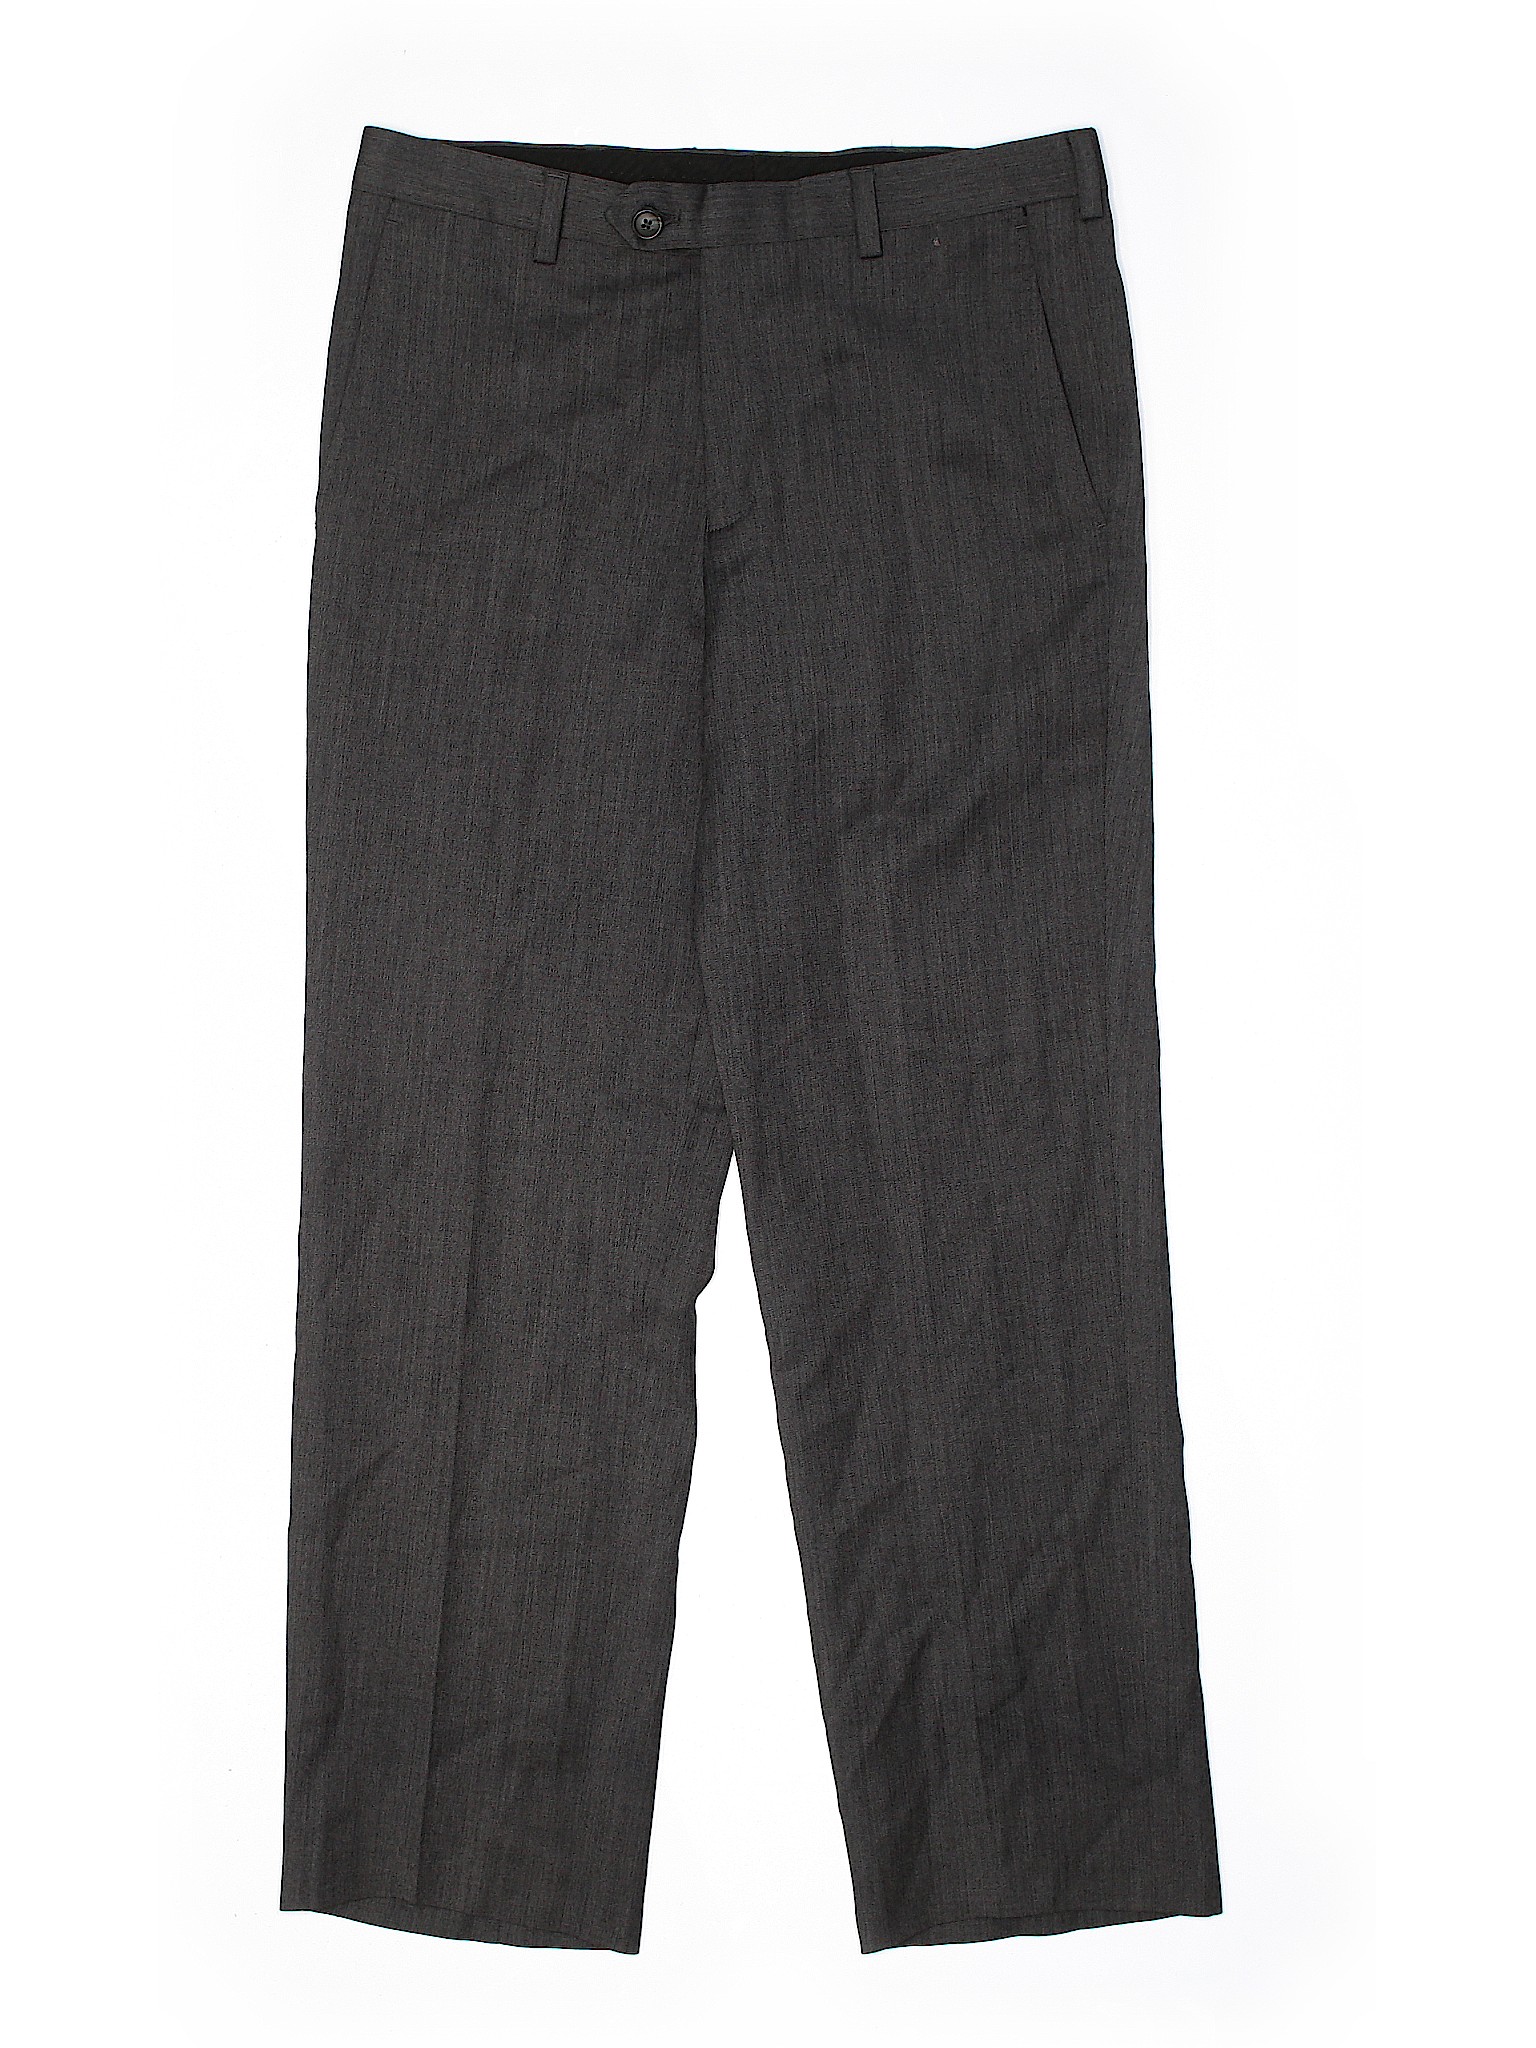 Michael Kors Boys Gray Wool Pants 14 | eBay